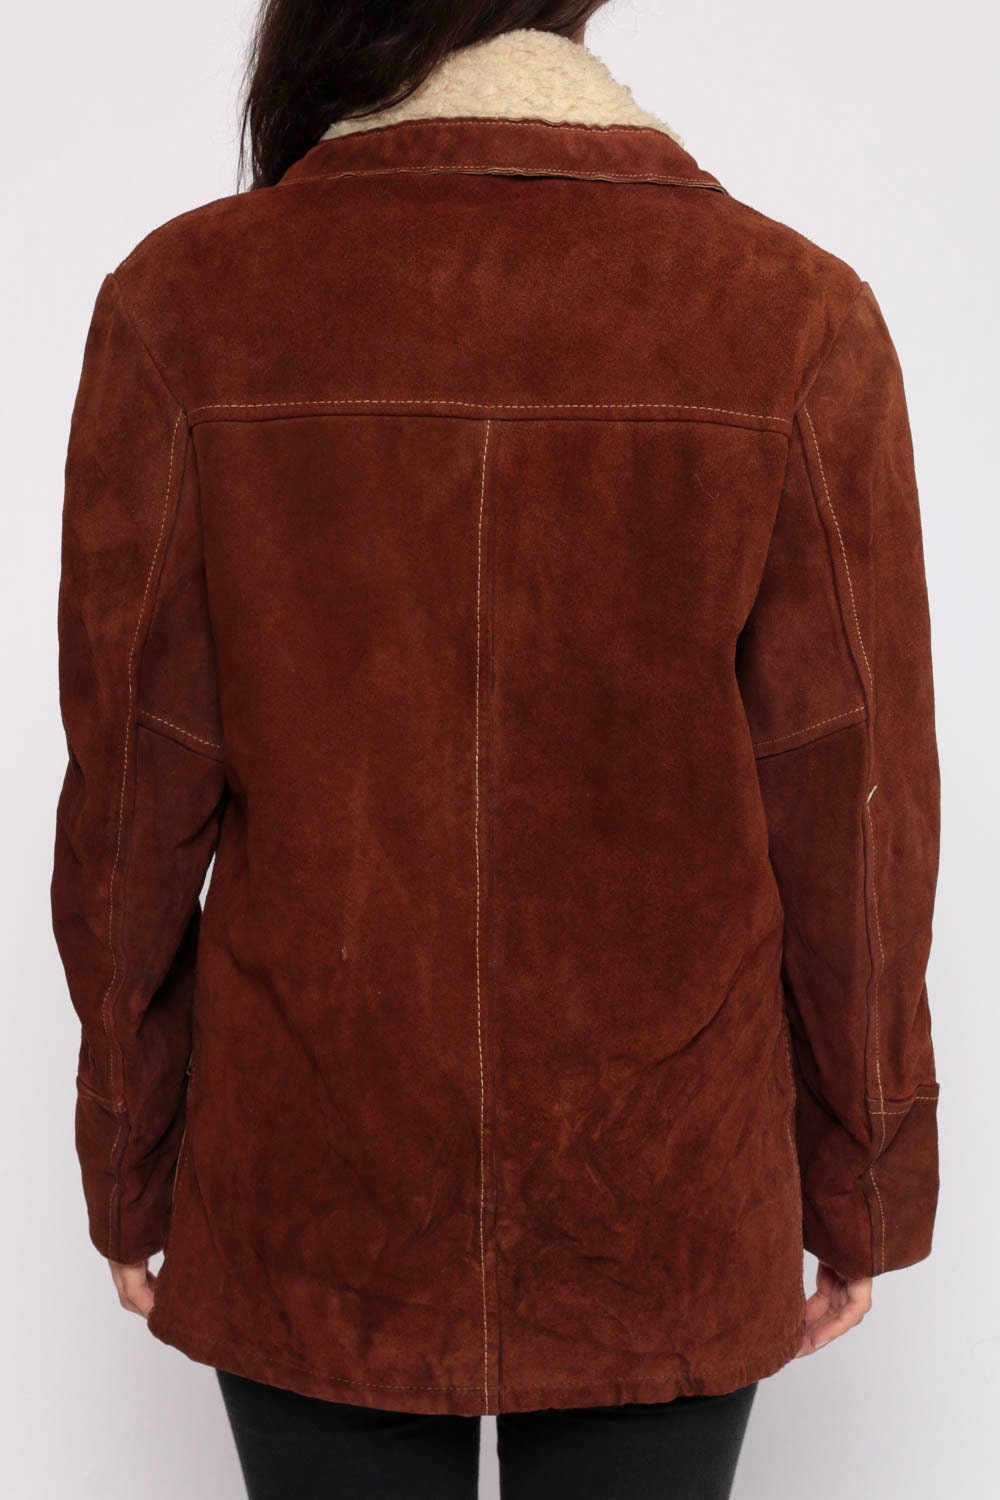 Brown Suede Jacket 70s Leather Jacket SHERPA COLLAR Boho Coat Hippie ...